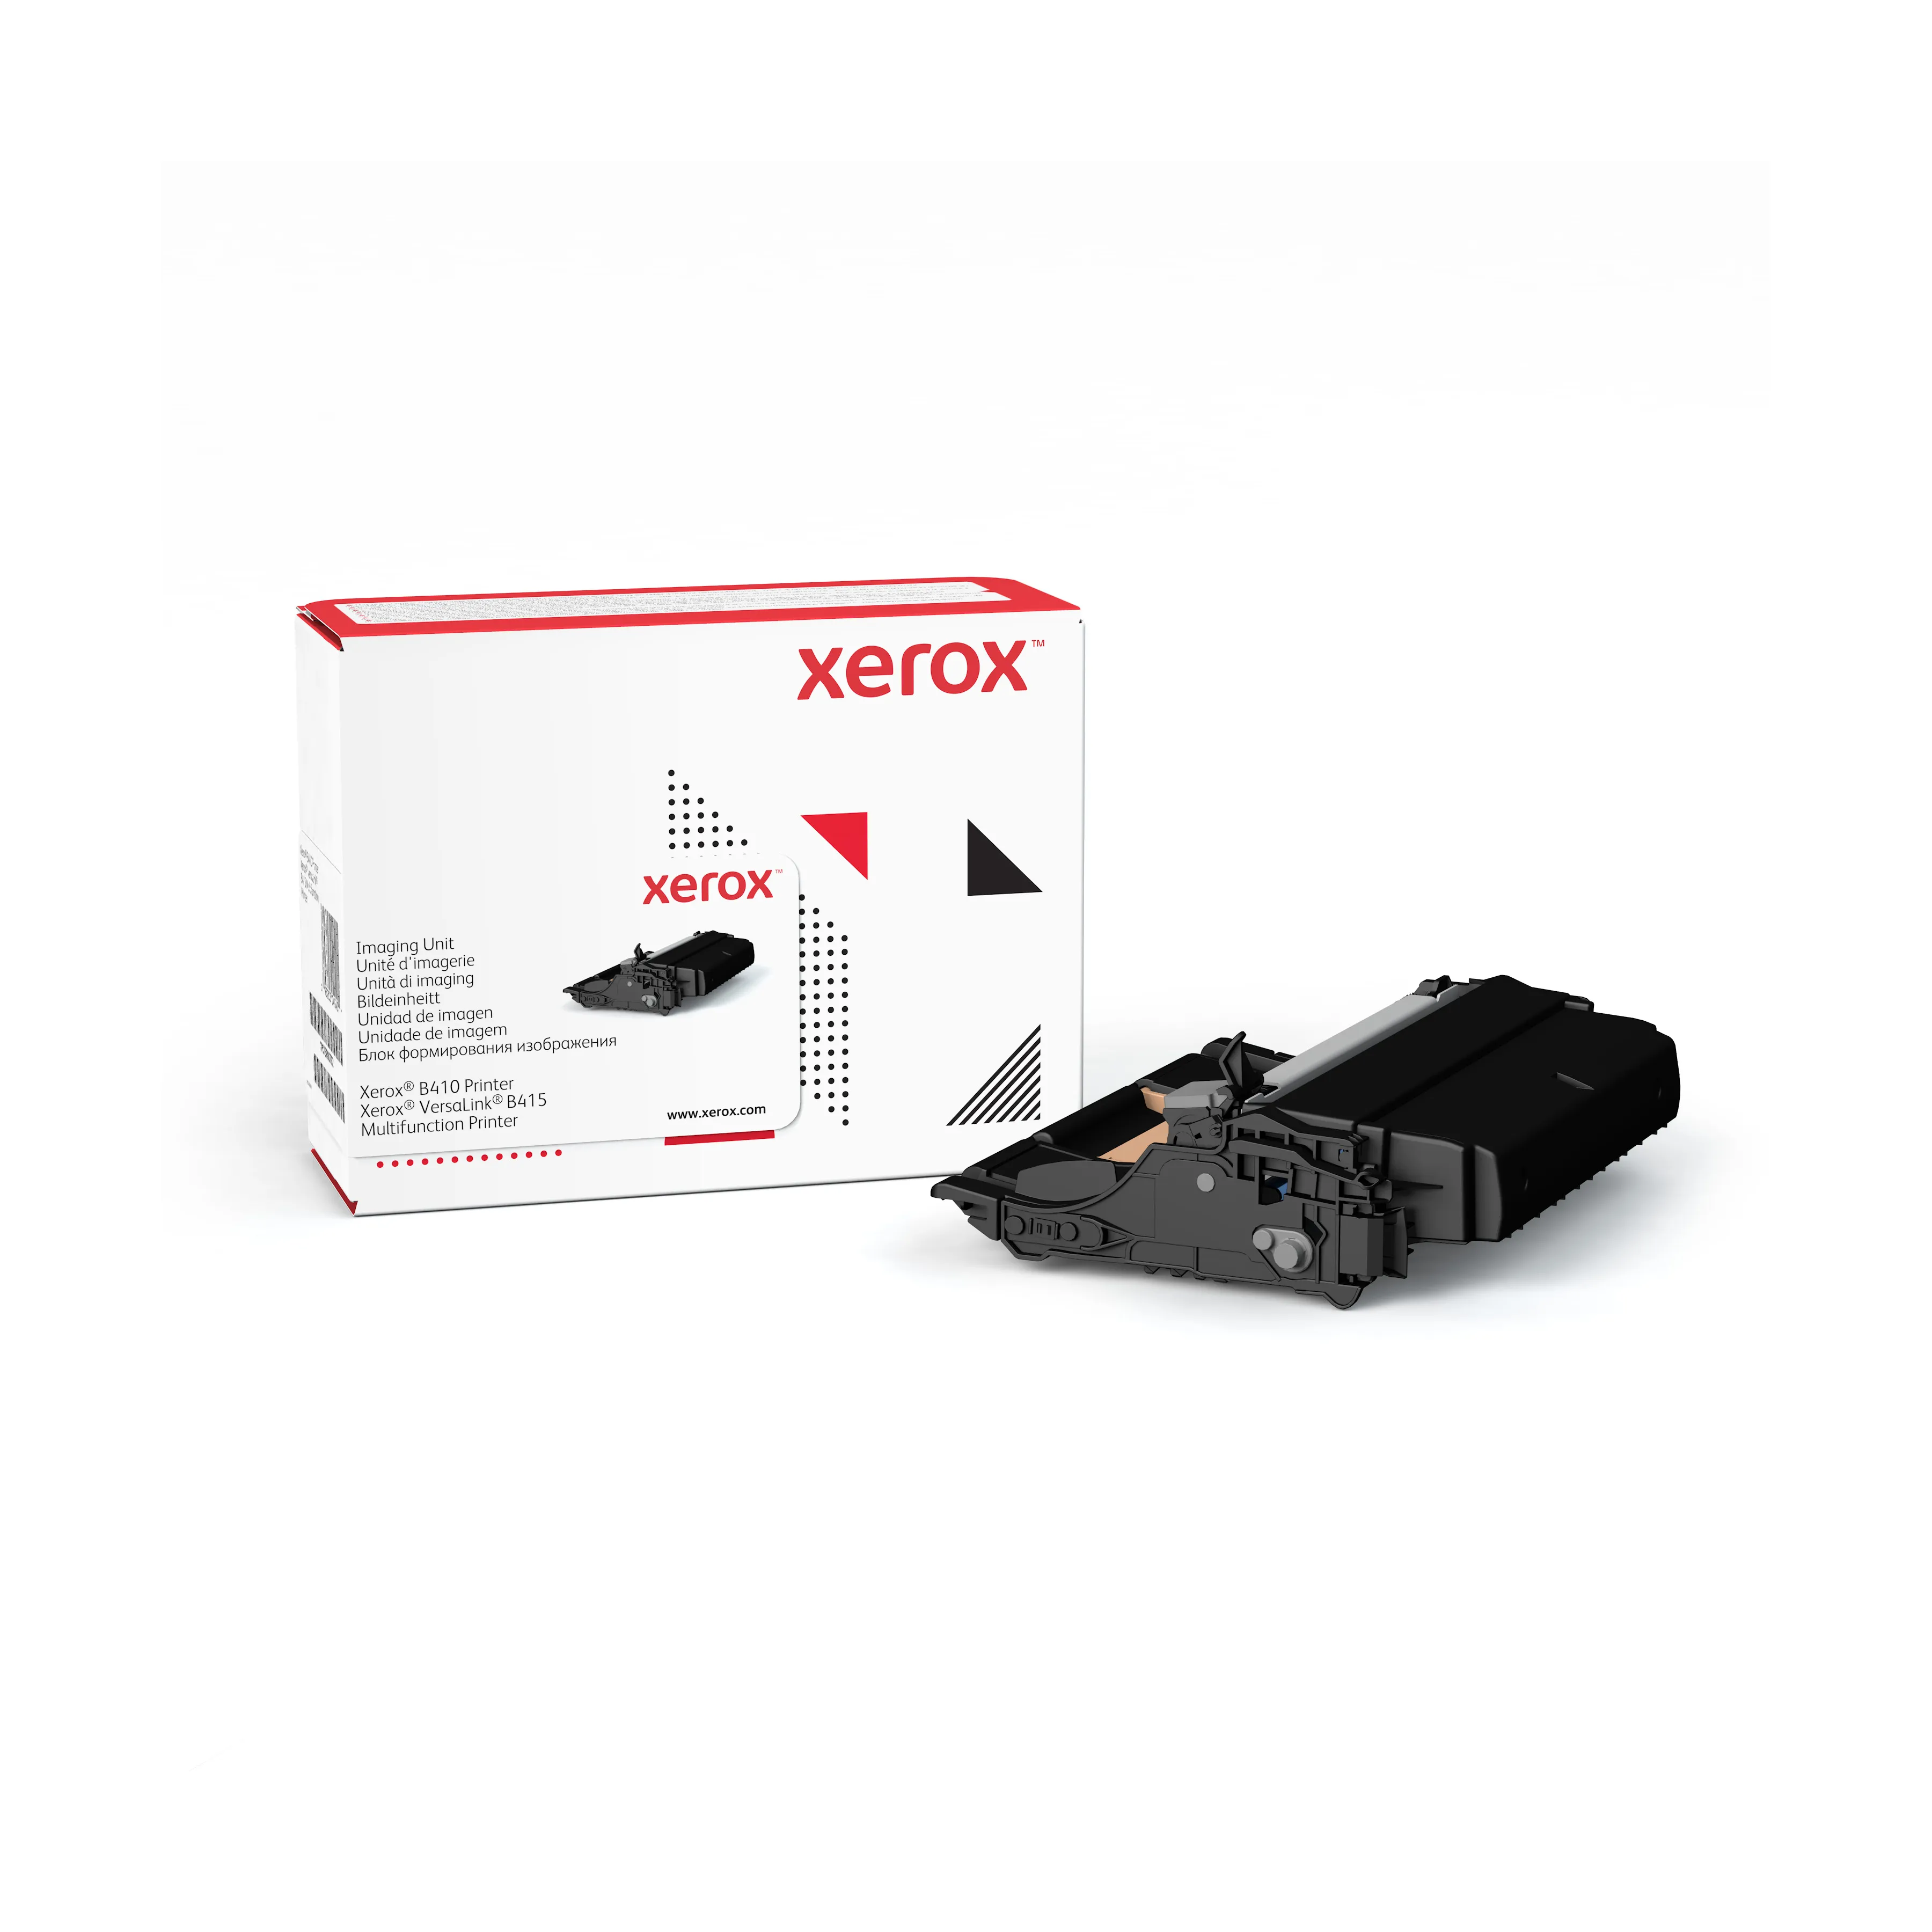 Vente XEROX B410/B415 Drum Cartridge 75000 Pages au meilleur prix